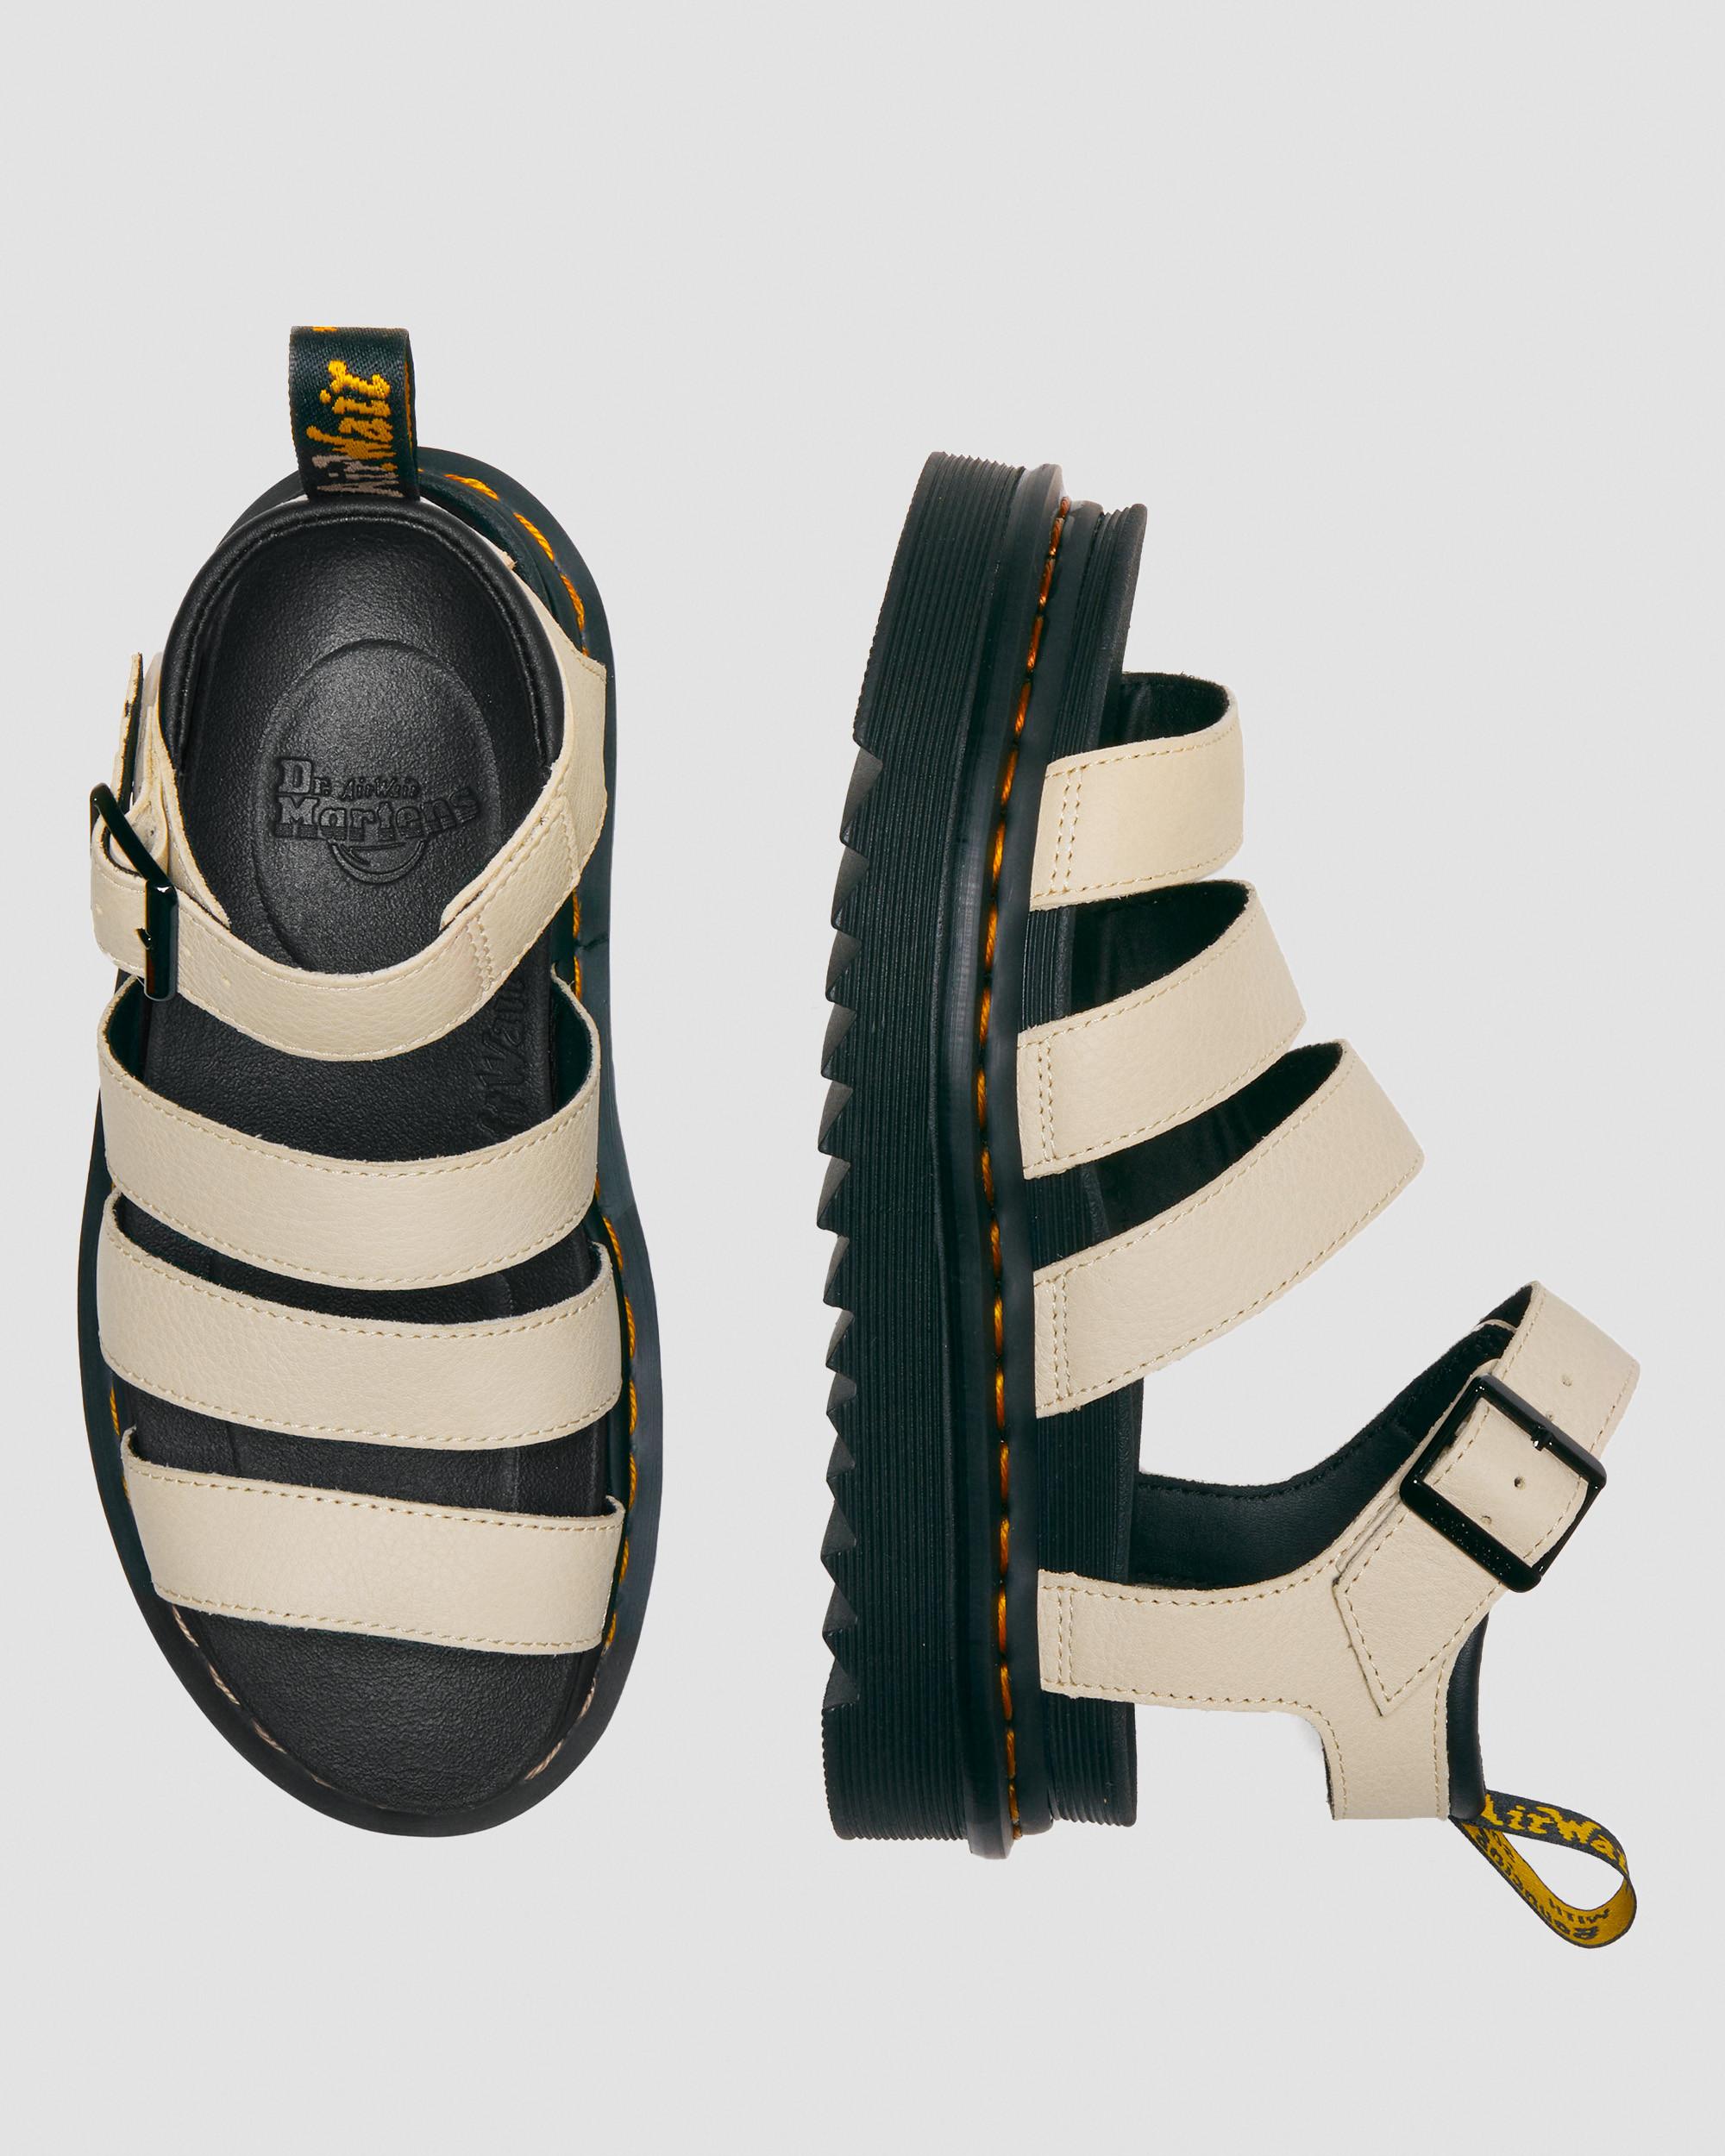 Blaire Pisa Leather Sandals